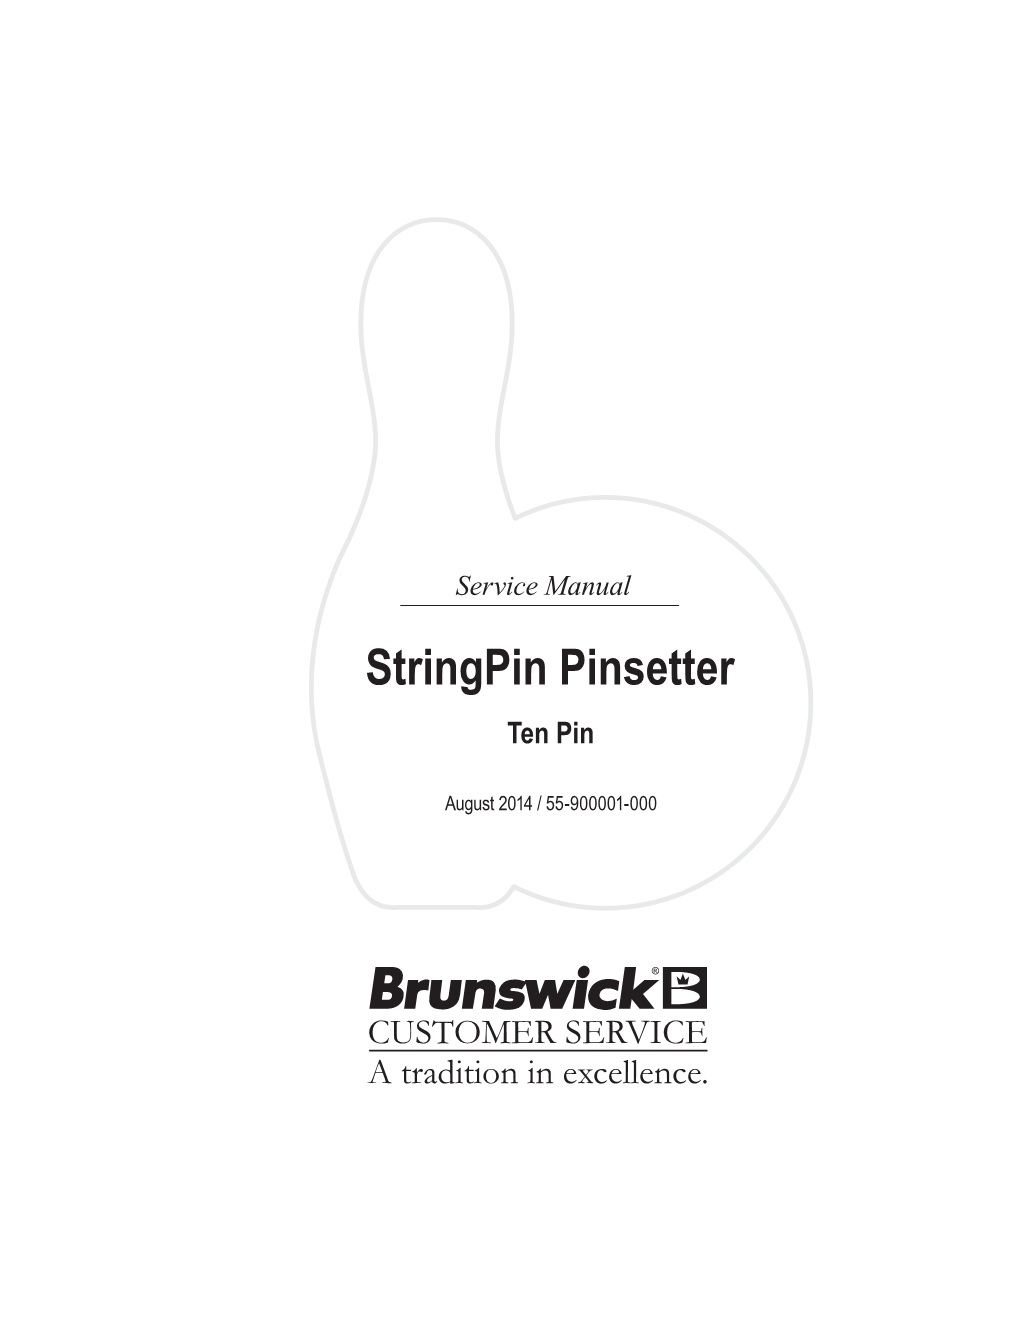 Stringpin Pinsetter Ten Pin